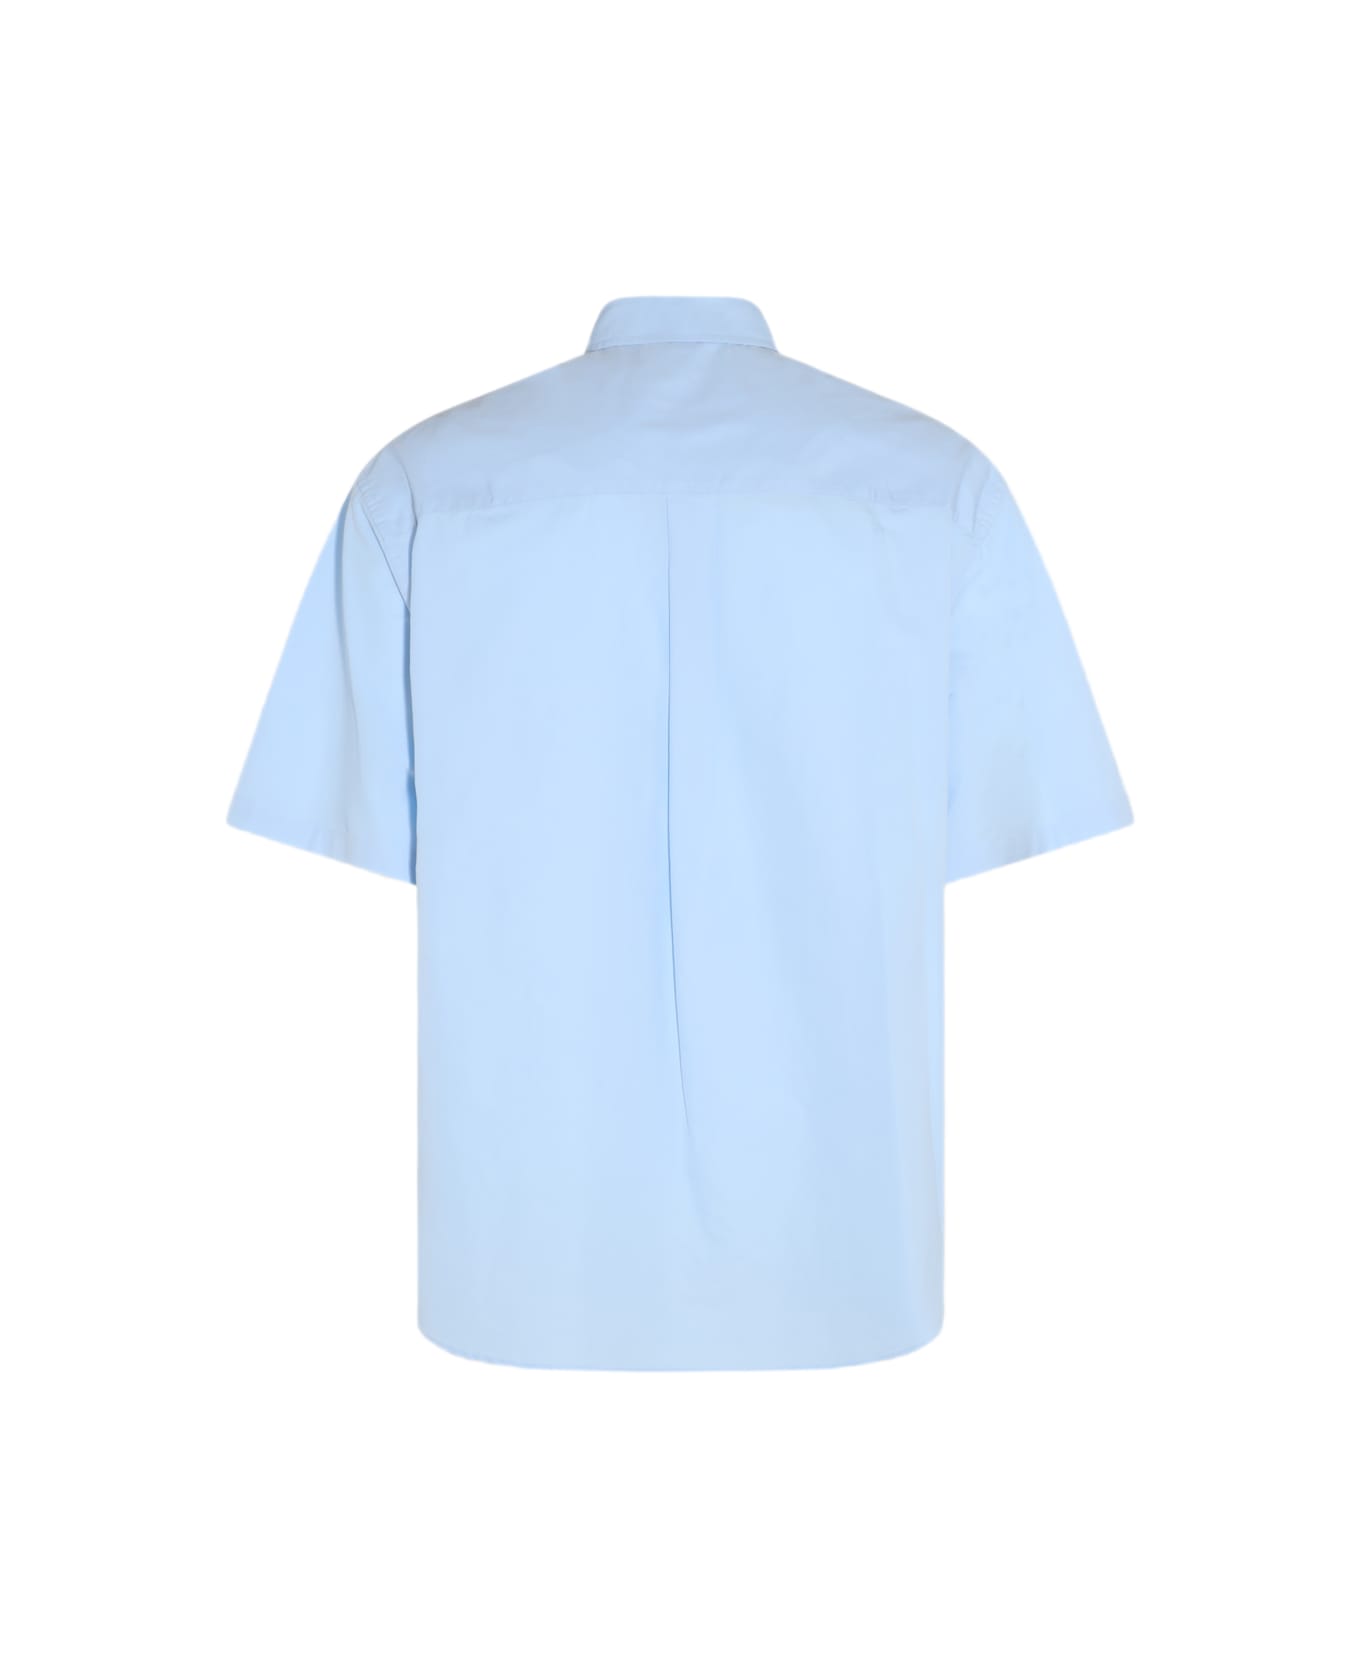 Undercover Jun Takahashi Light Blue Cotton Shirt